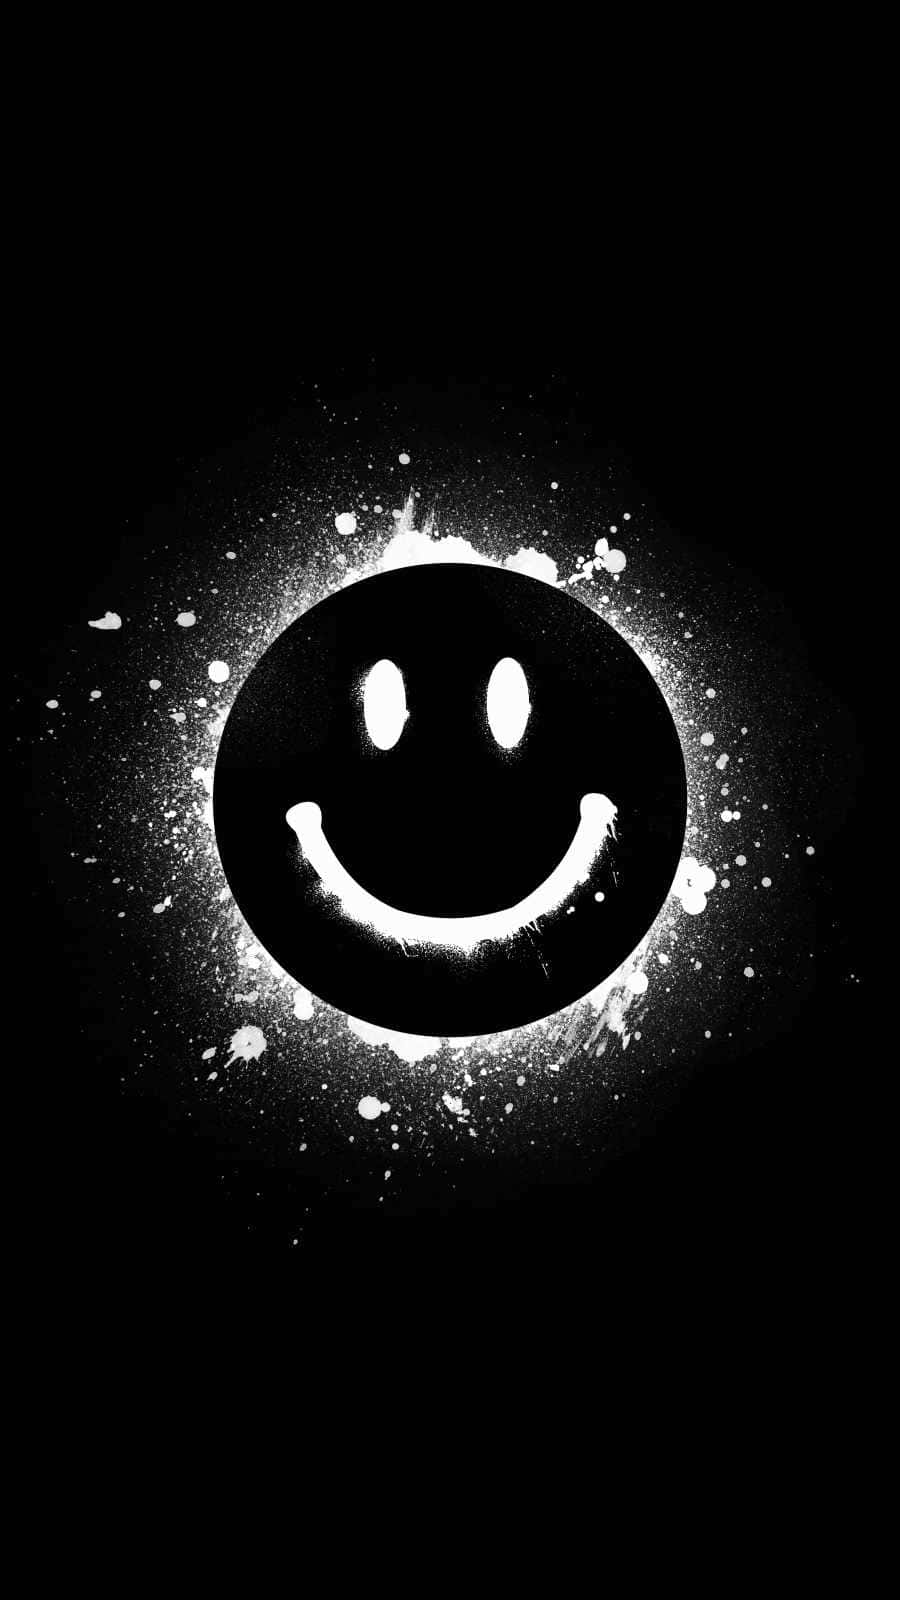 Enigmatic Black Smile On Grunge Background